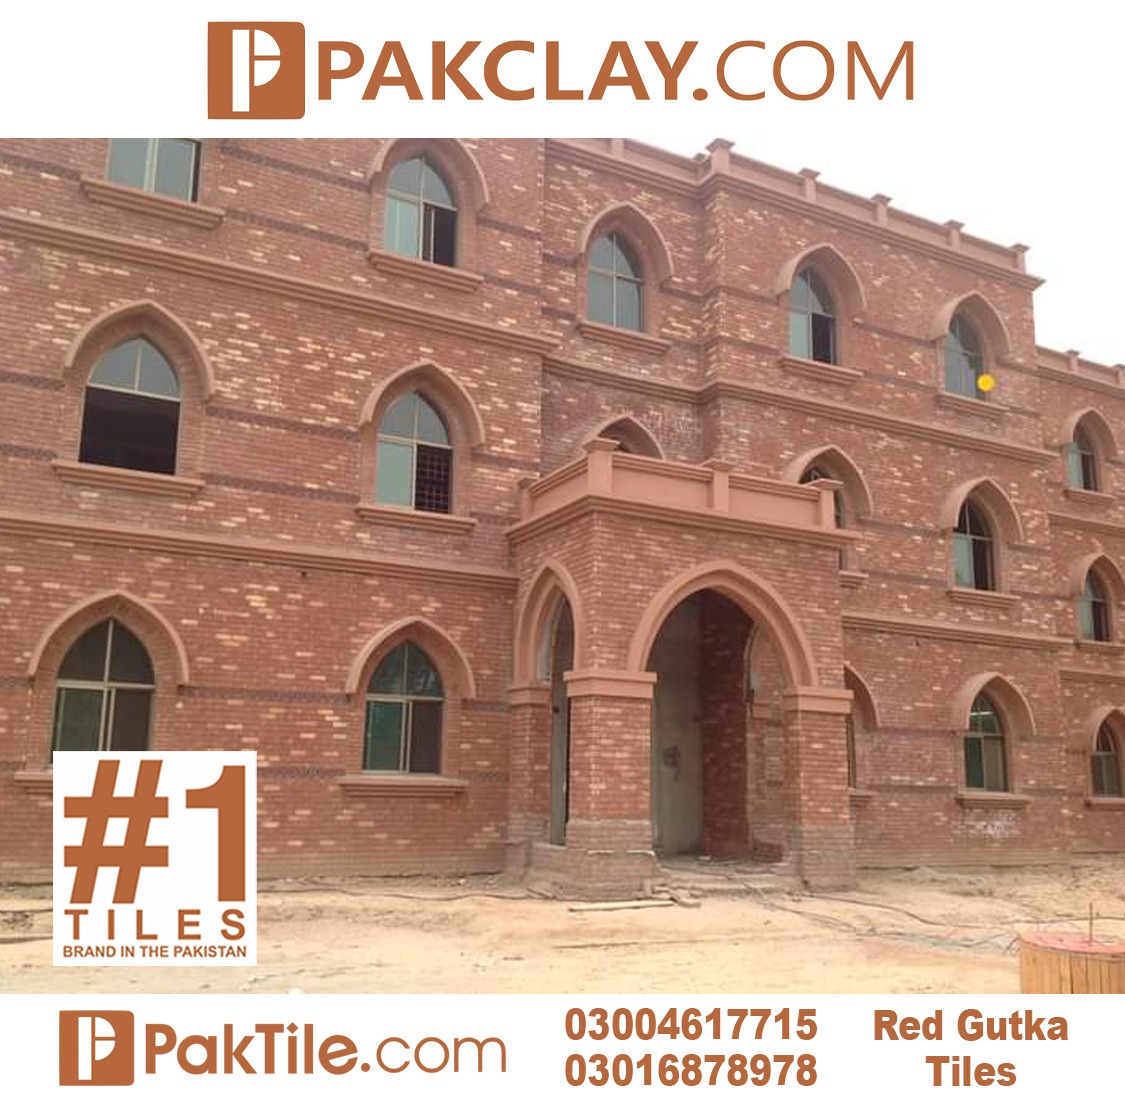 brick tiles for walls in Pakistan